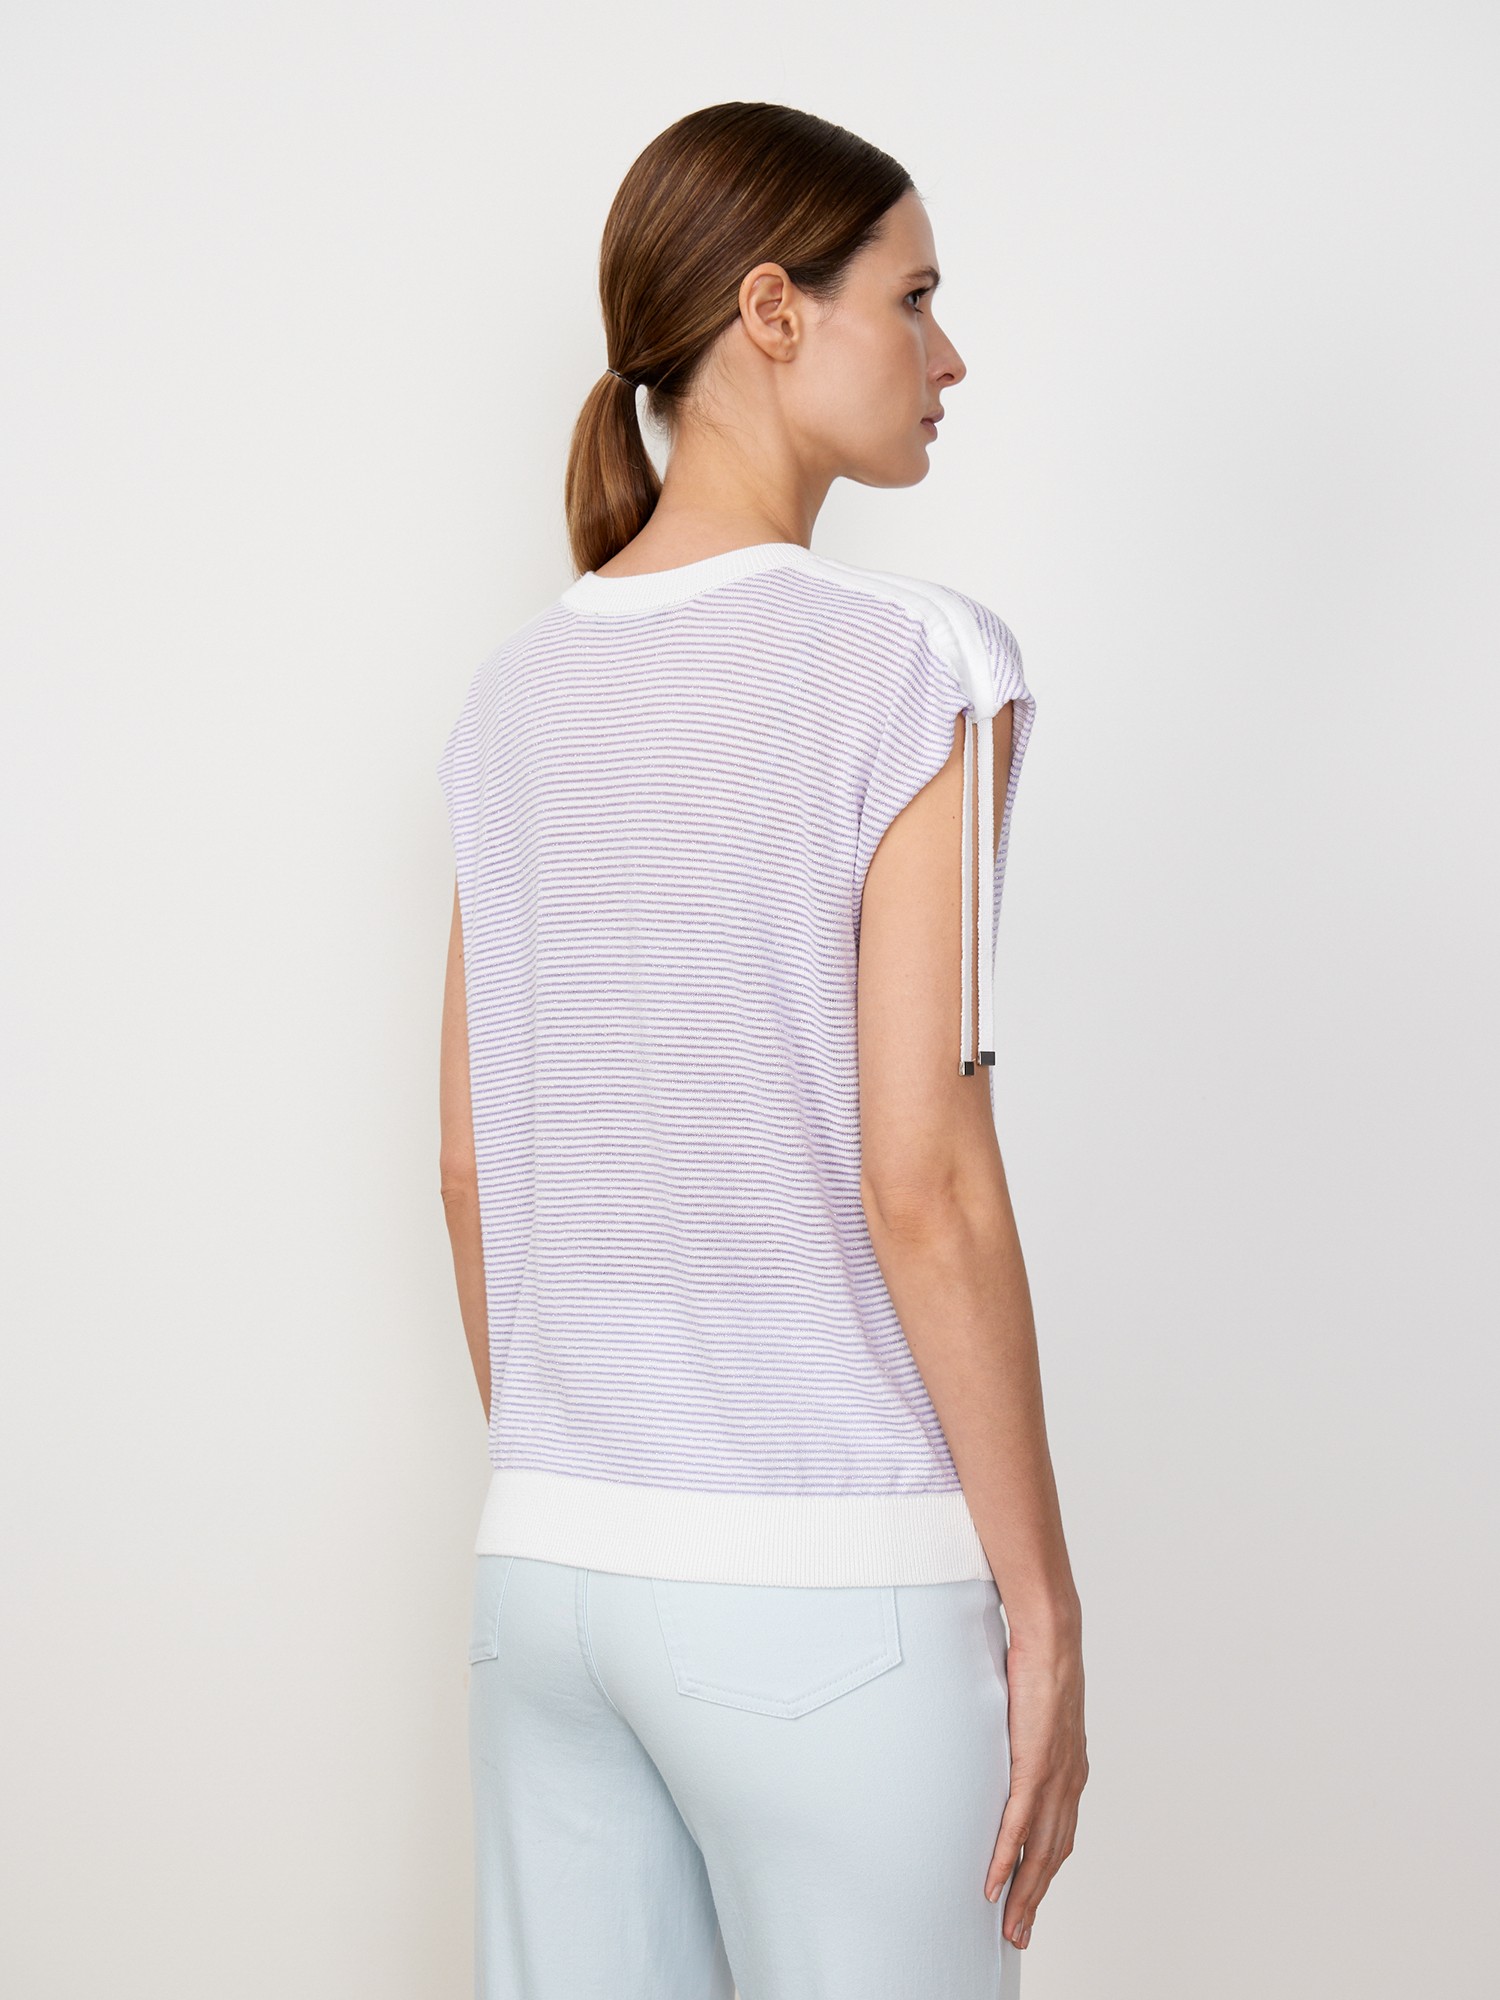 Вязаная блуза с люрексом Elis BL1054V, цвет фиолетовый, размер 42 - фото 4